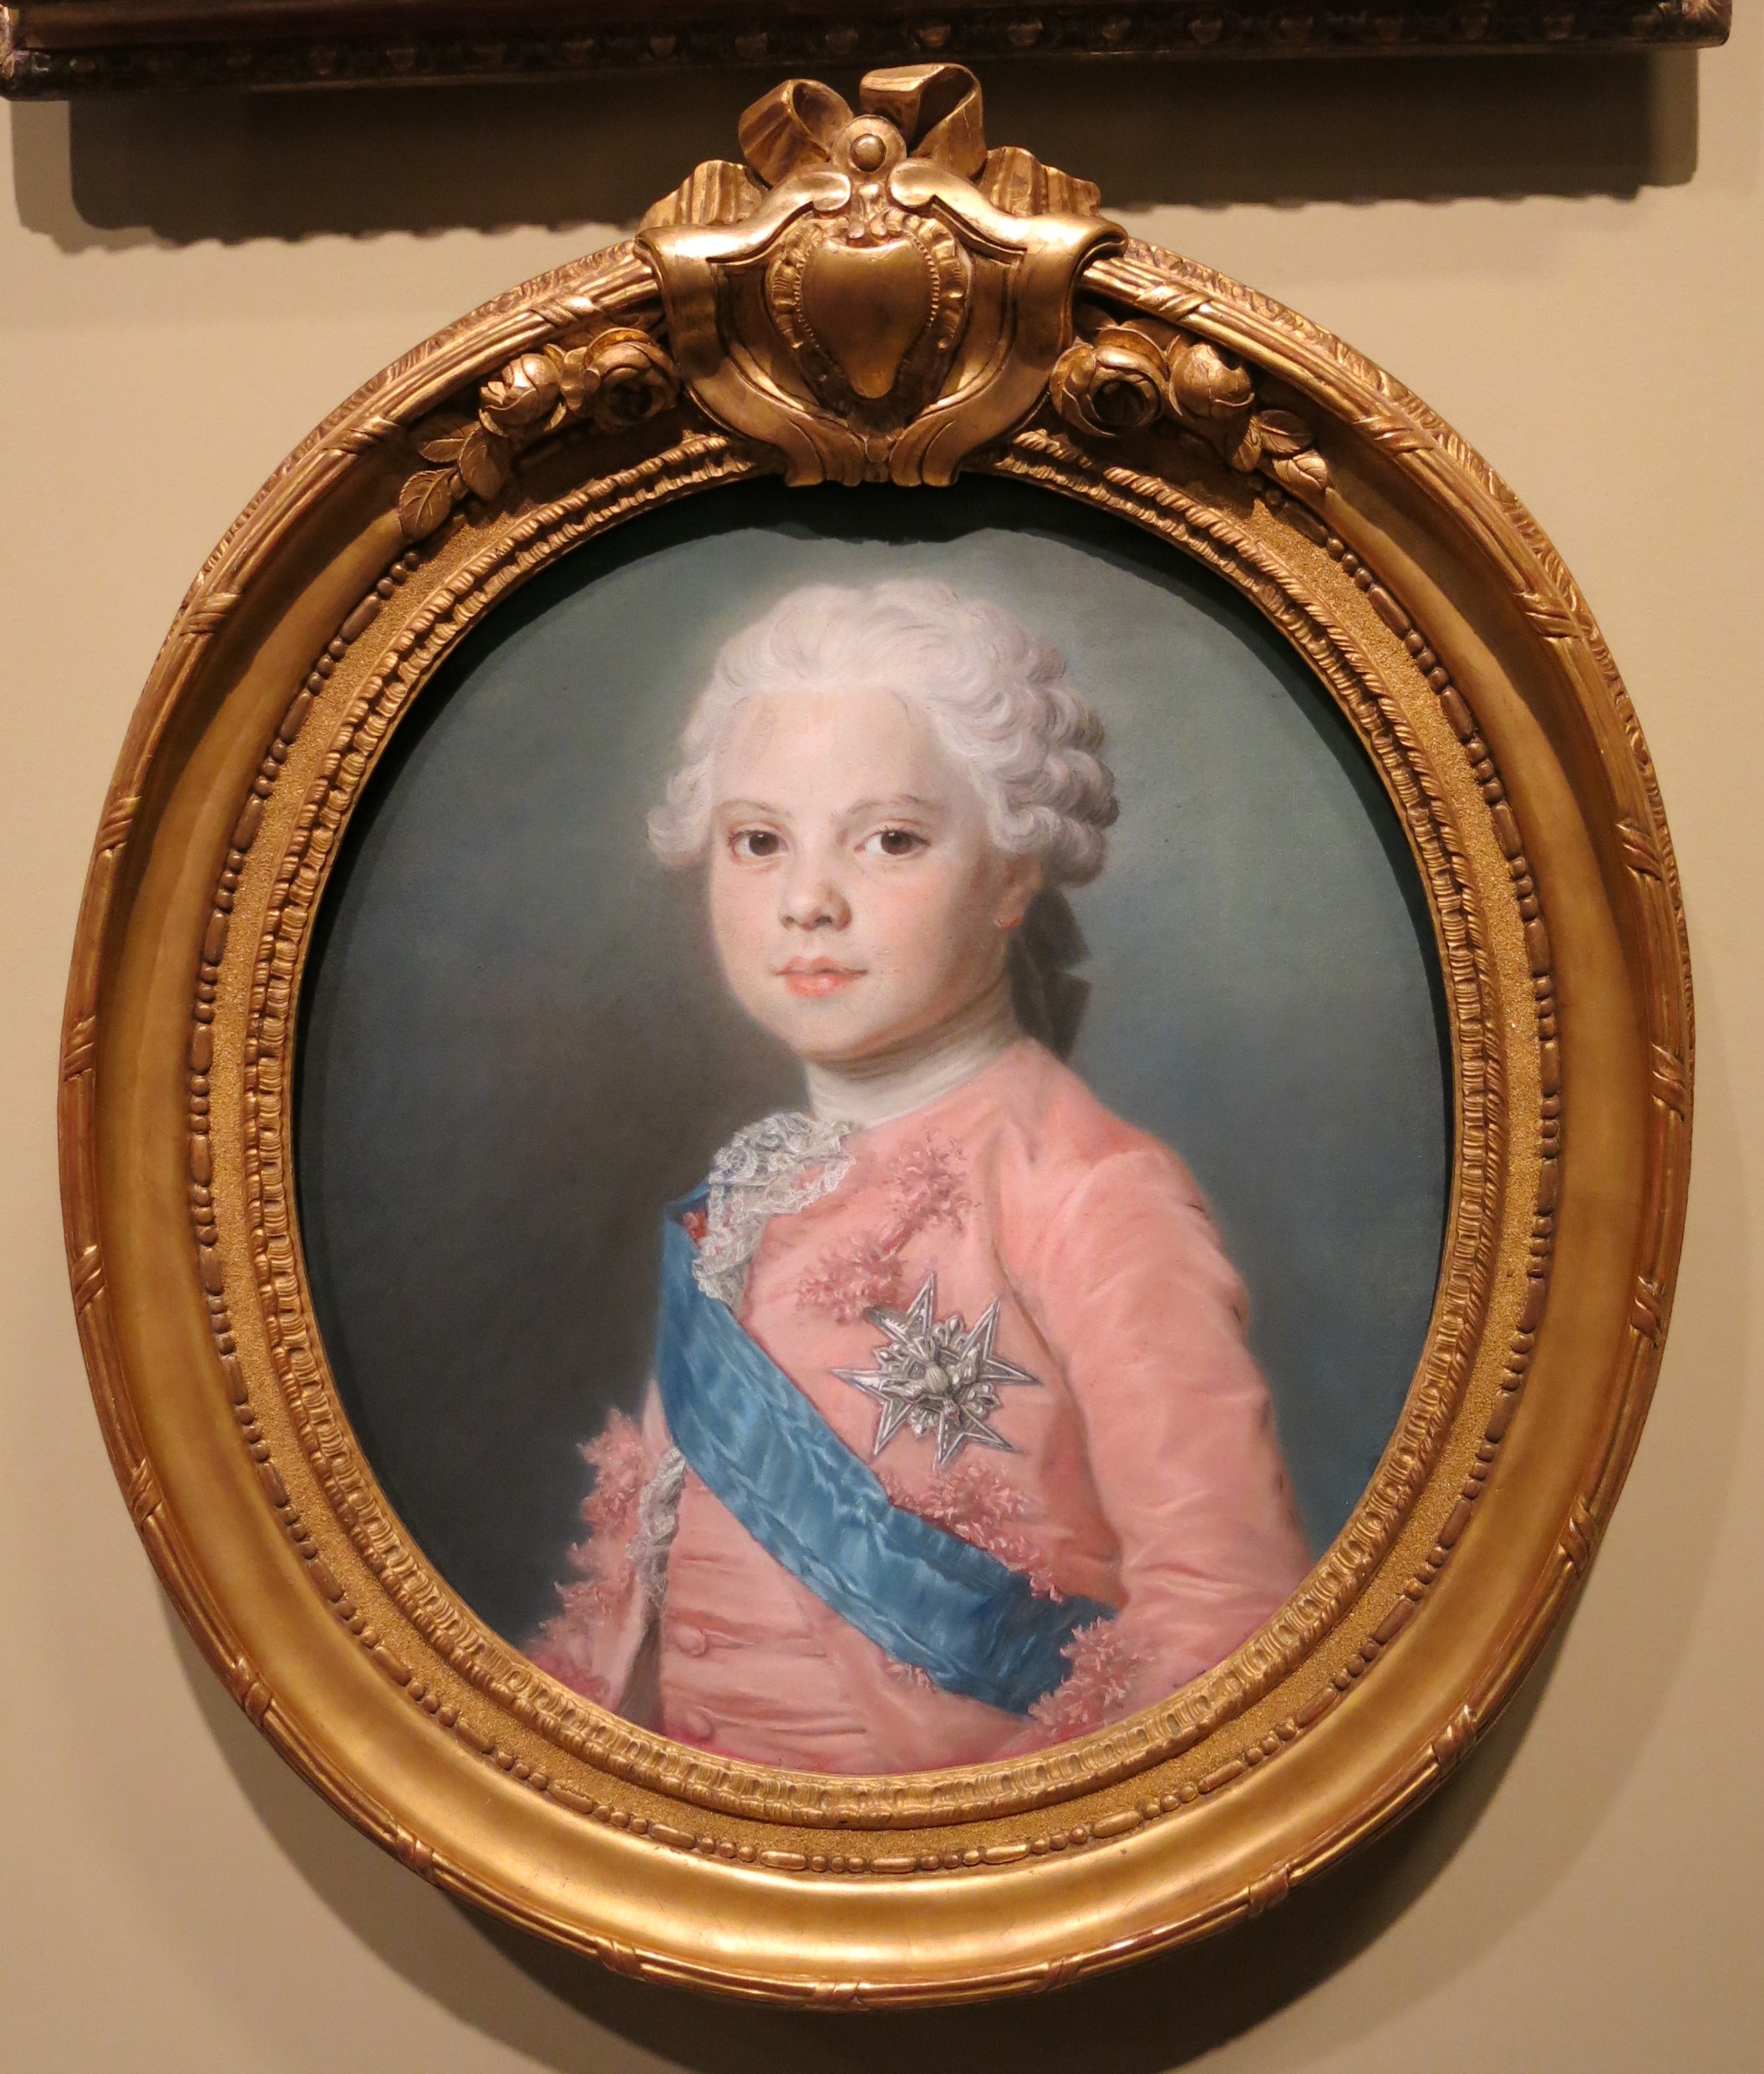 Louis XVIII - Wikipedia